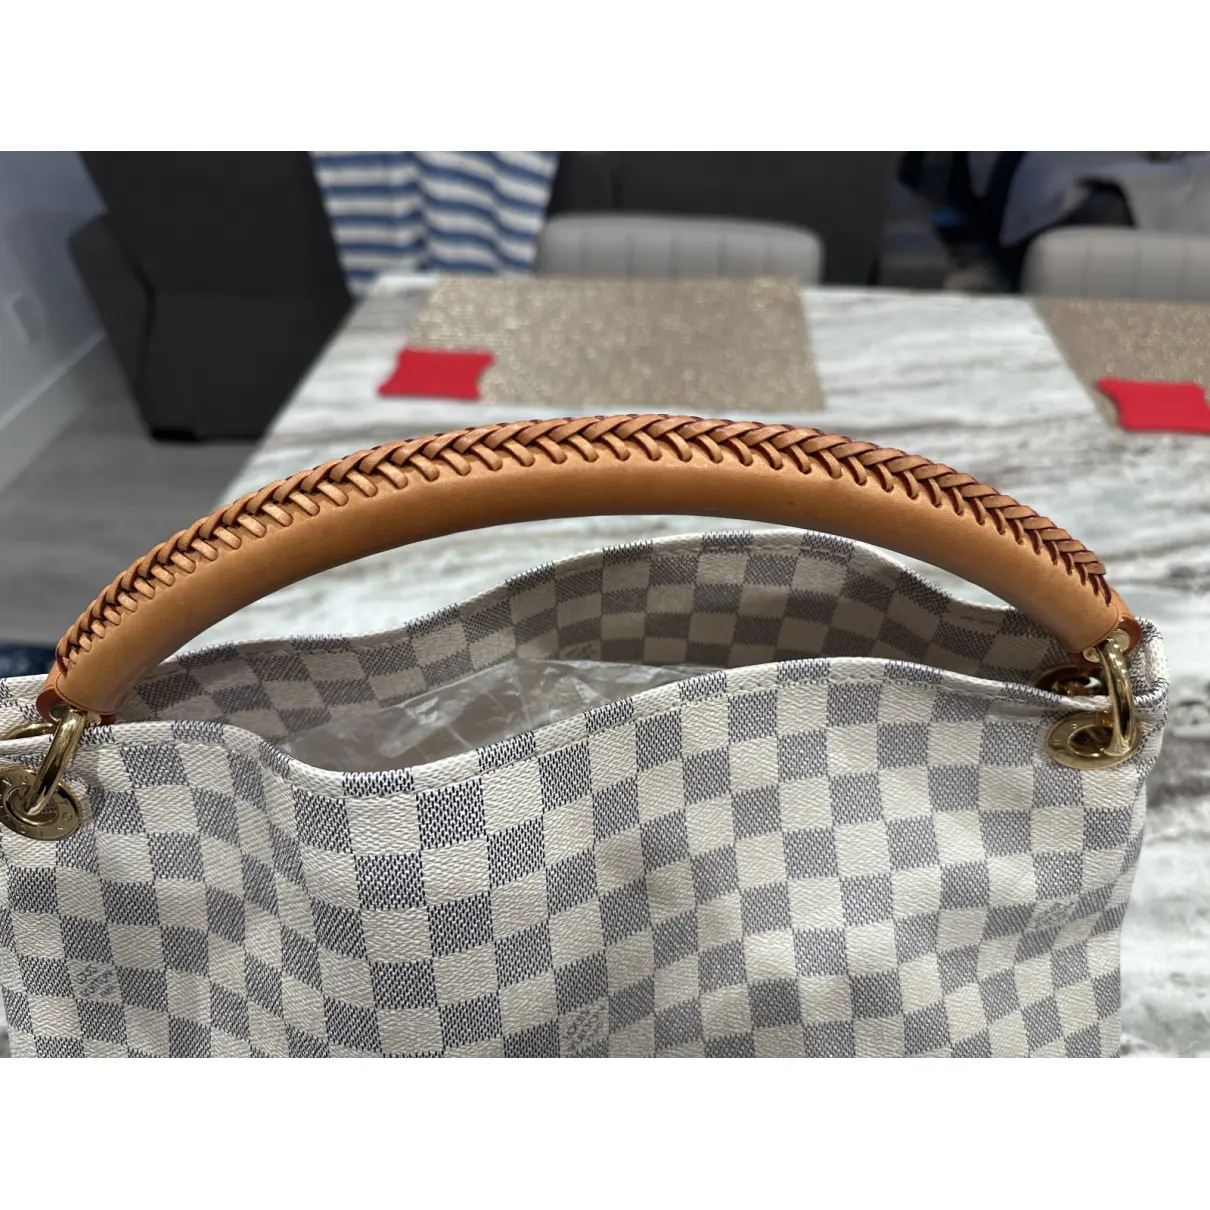 Artsy leather handbag Louis Vuitton